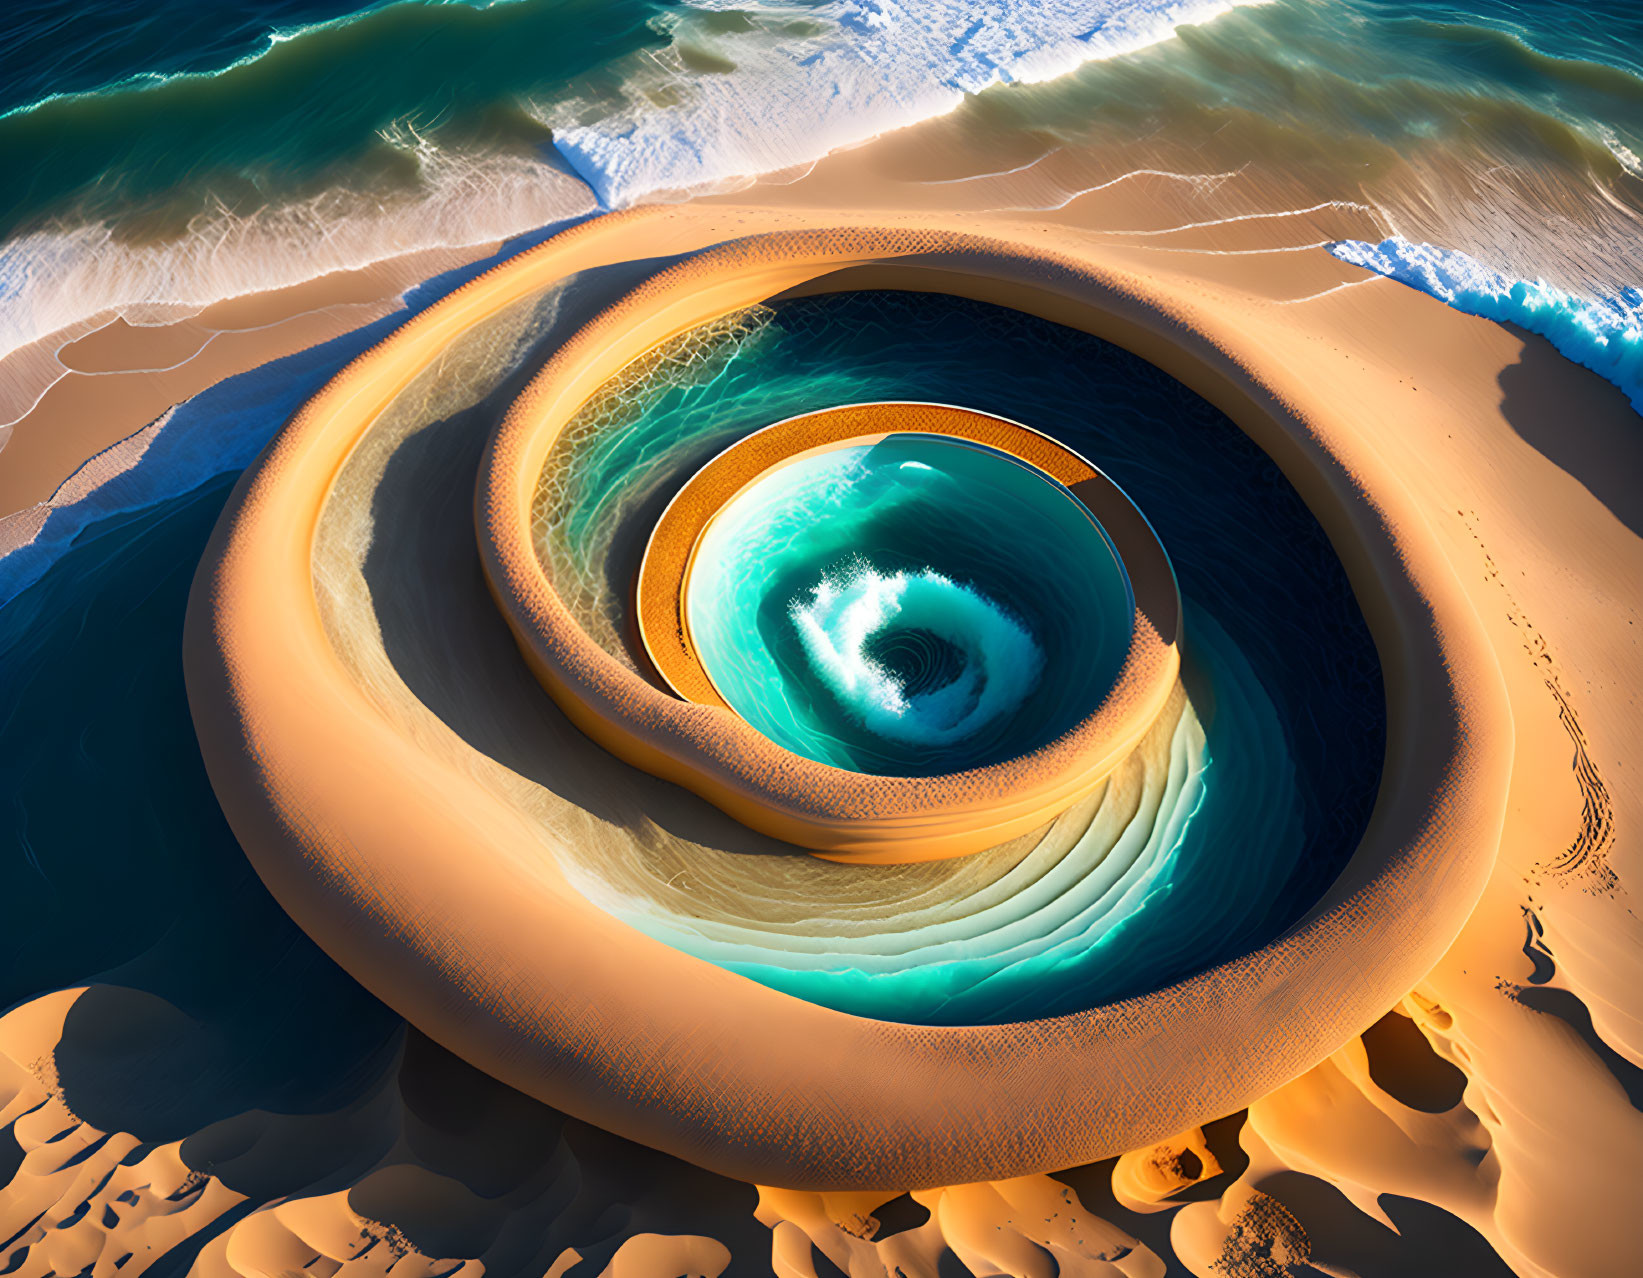 Surreal digital artwork: Beach and ocean blend in mesmerizing vortex